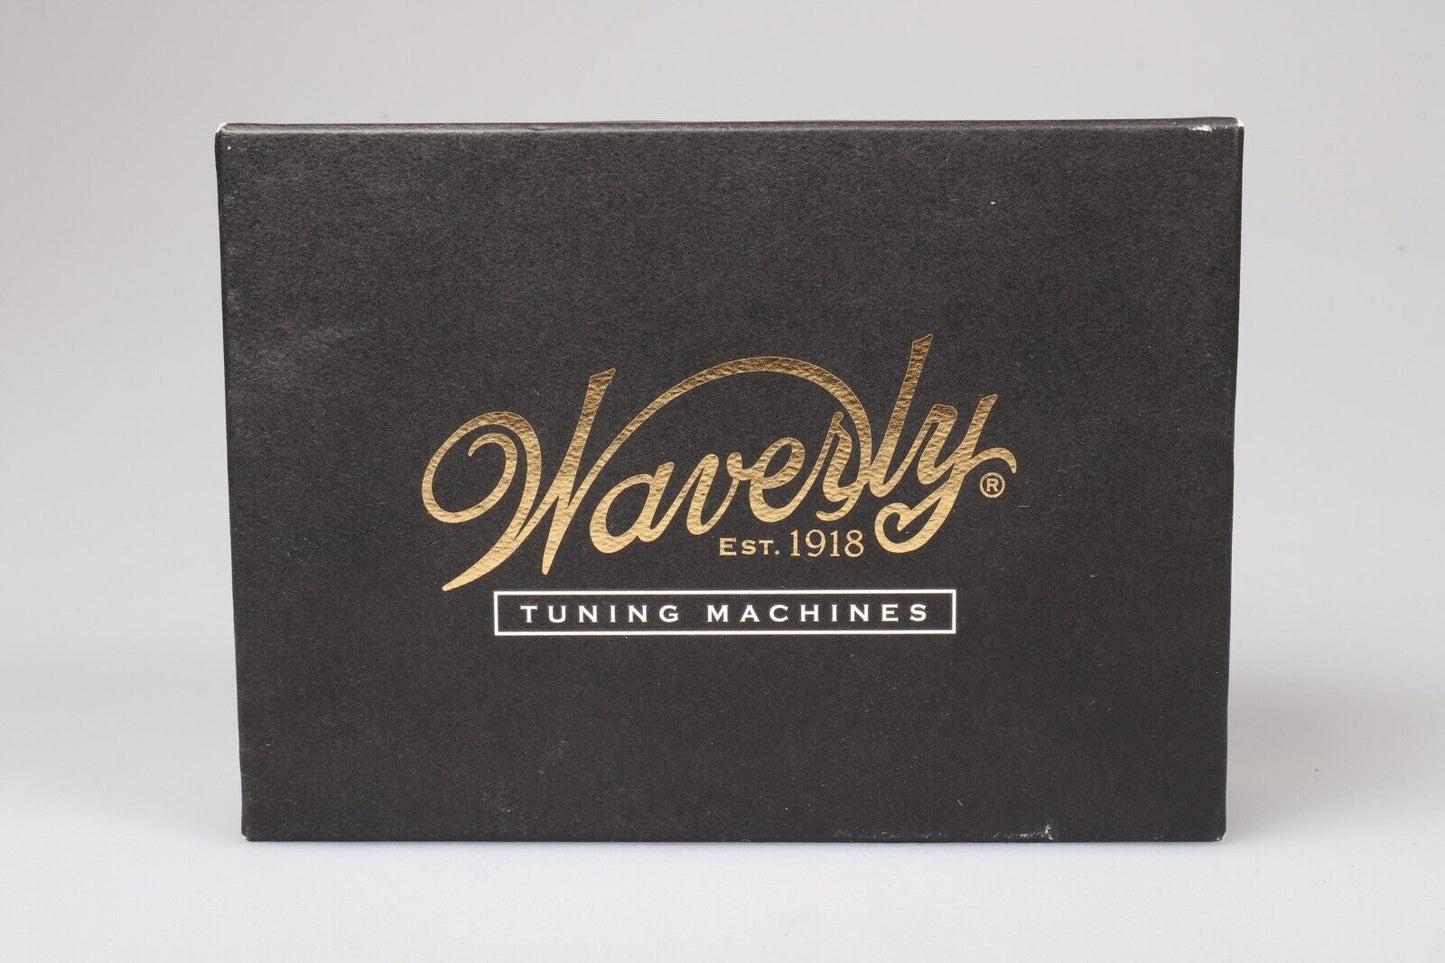 Waverly-stemmachines | KOA-knoppen